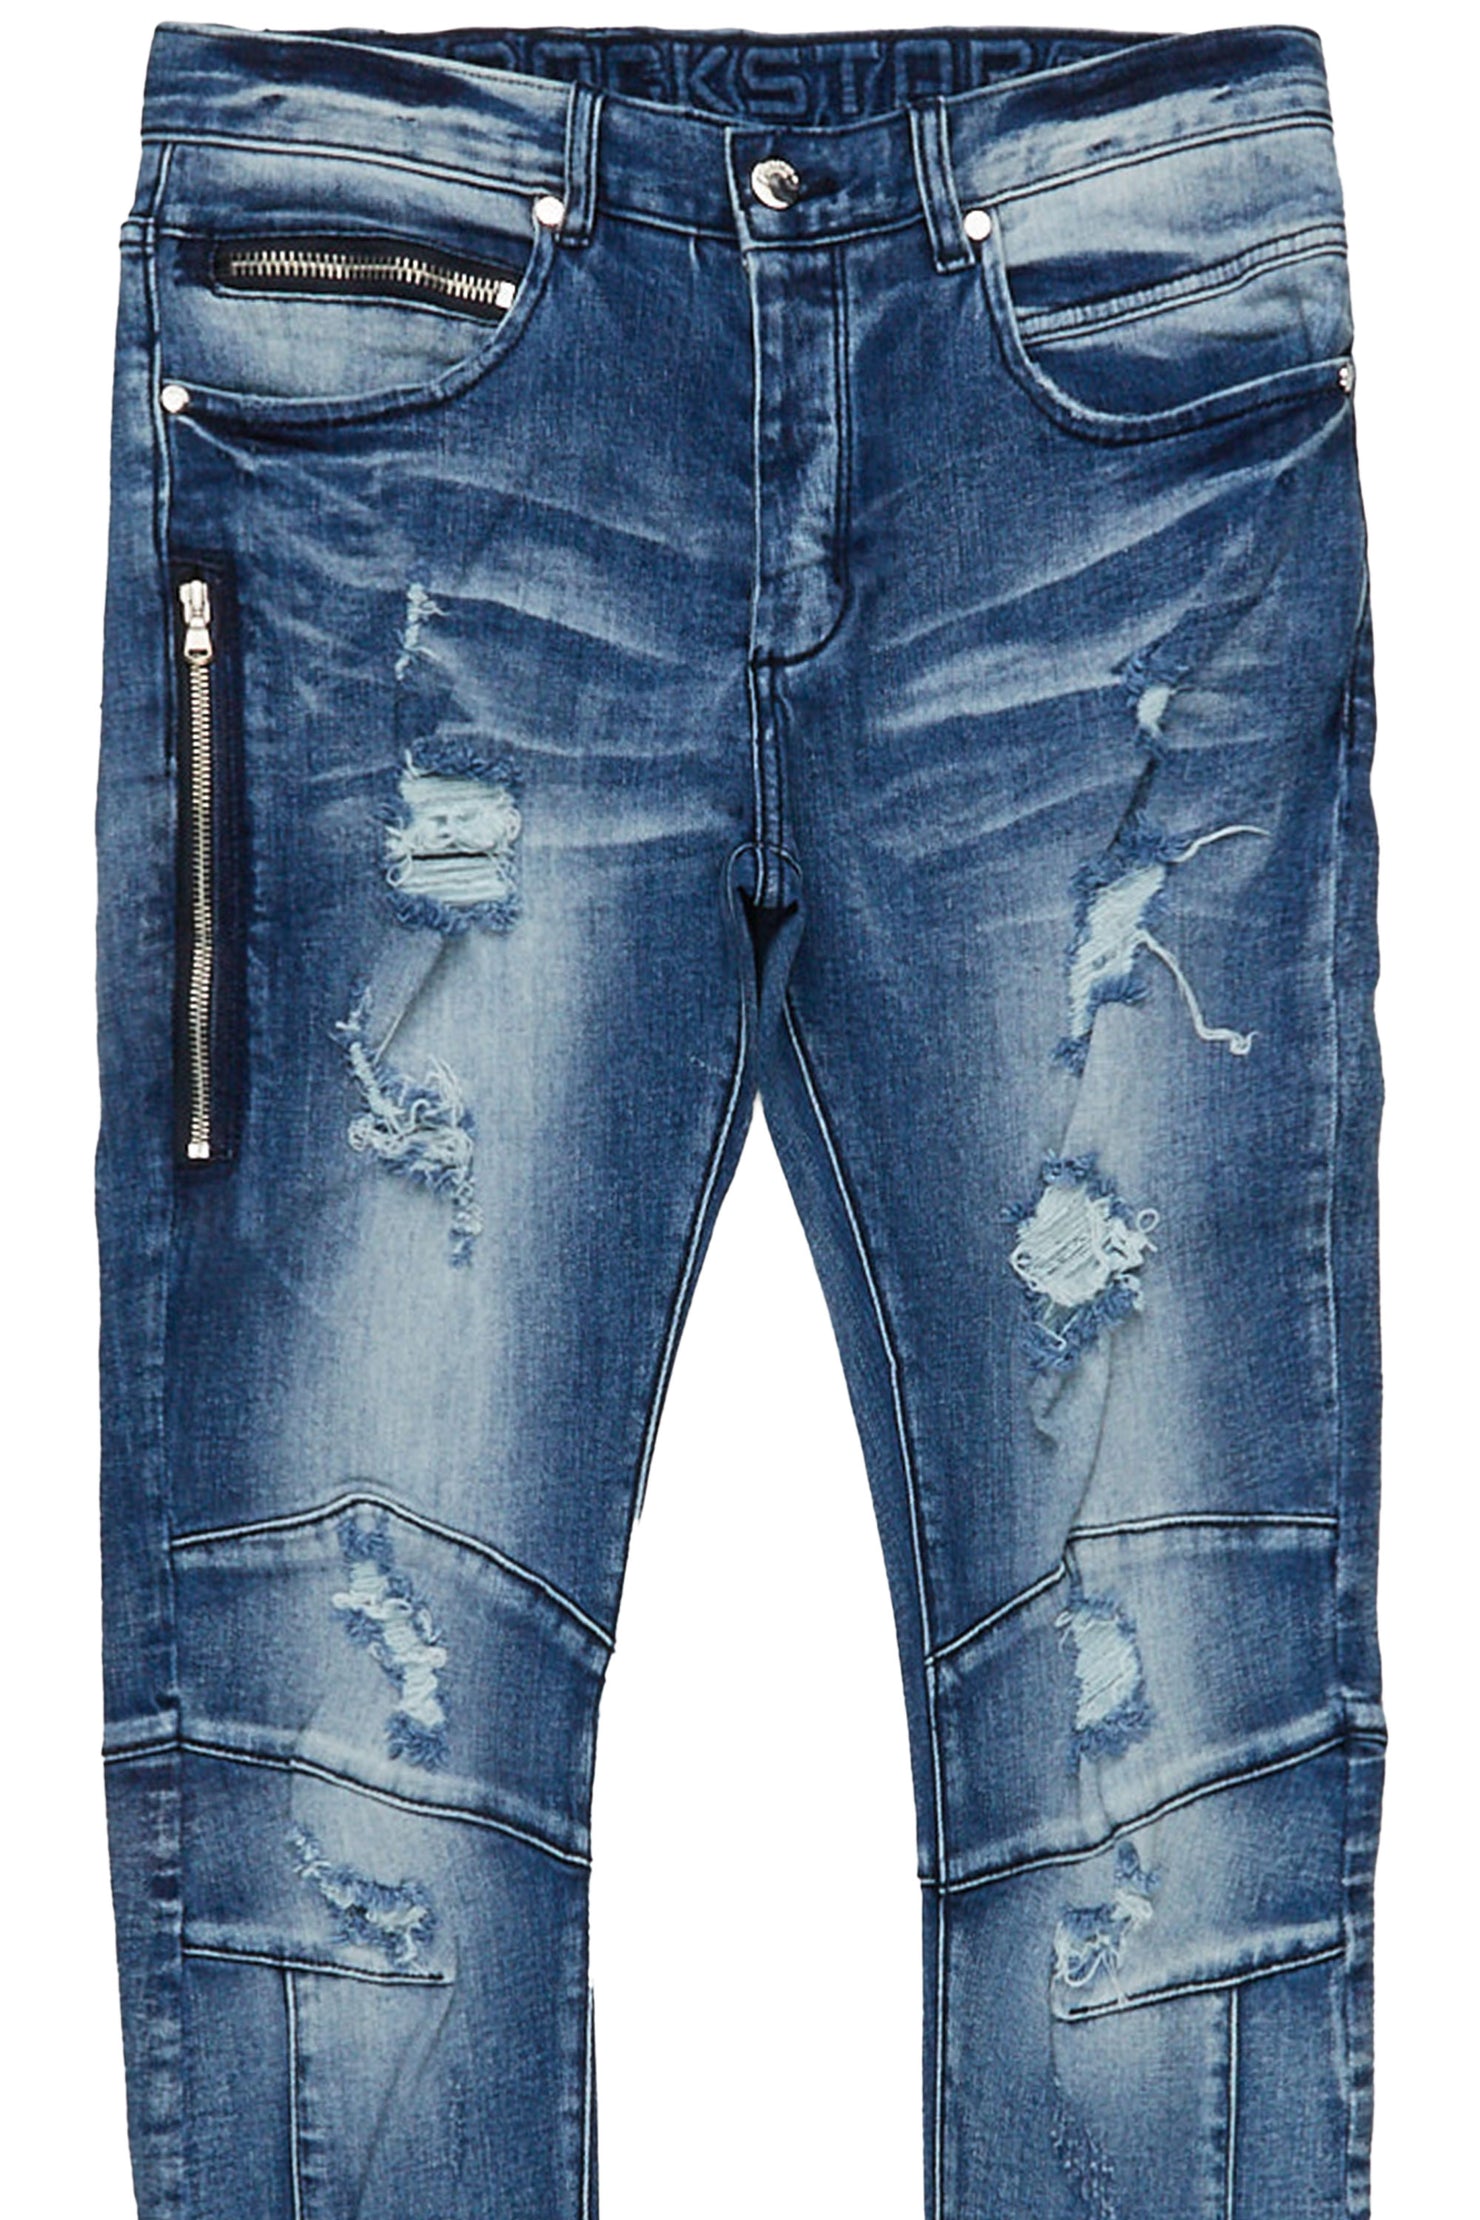 Nestor Blue 5 Pocket Skinny Jean